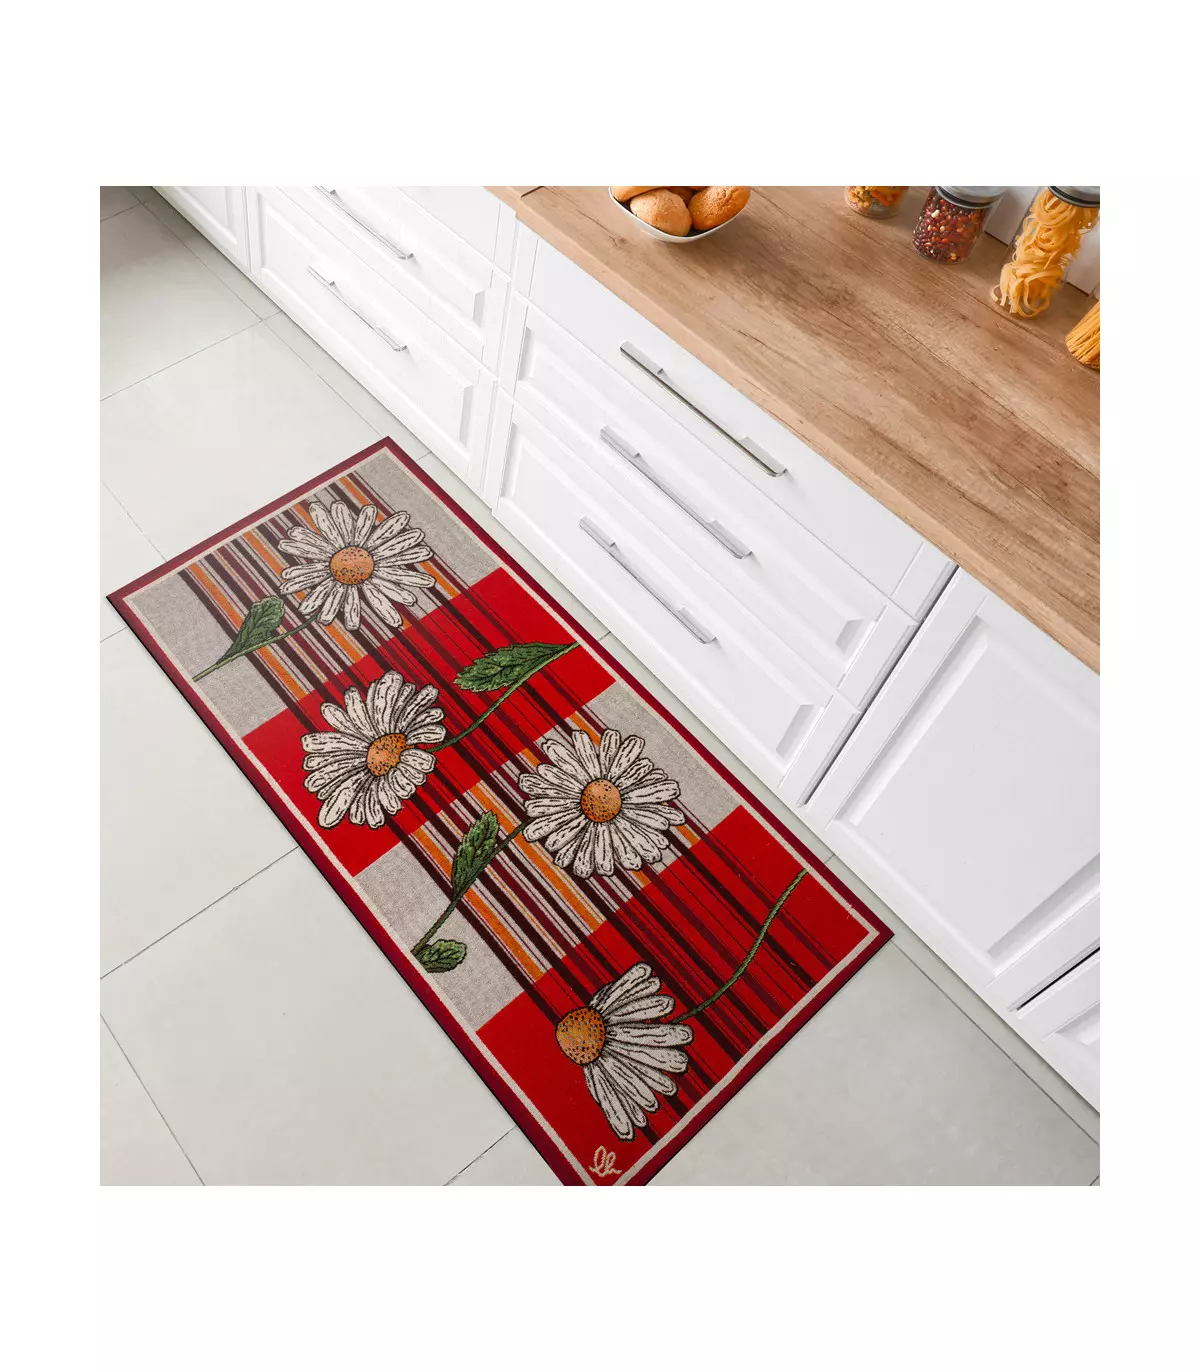 https://olivo.shop/14610-superlarge_default/sprint-daisy-floral-design-kitchen-rug-washable-non-slip-kitchen-runner-various-colors-and-sizes.webp